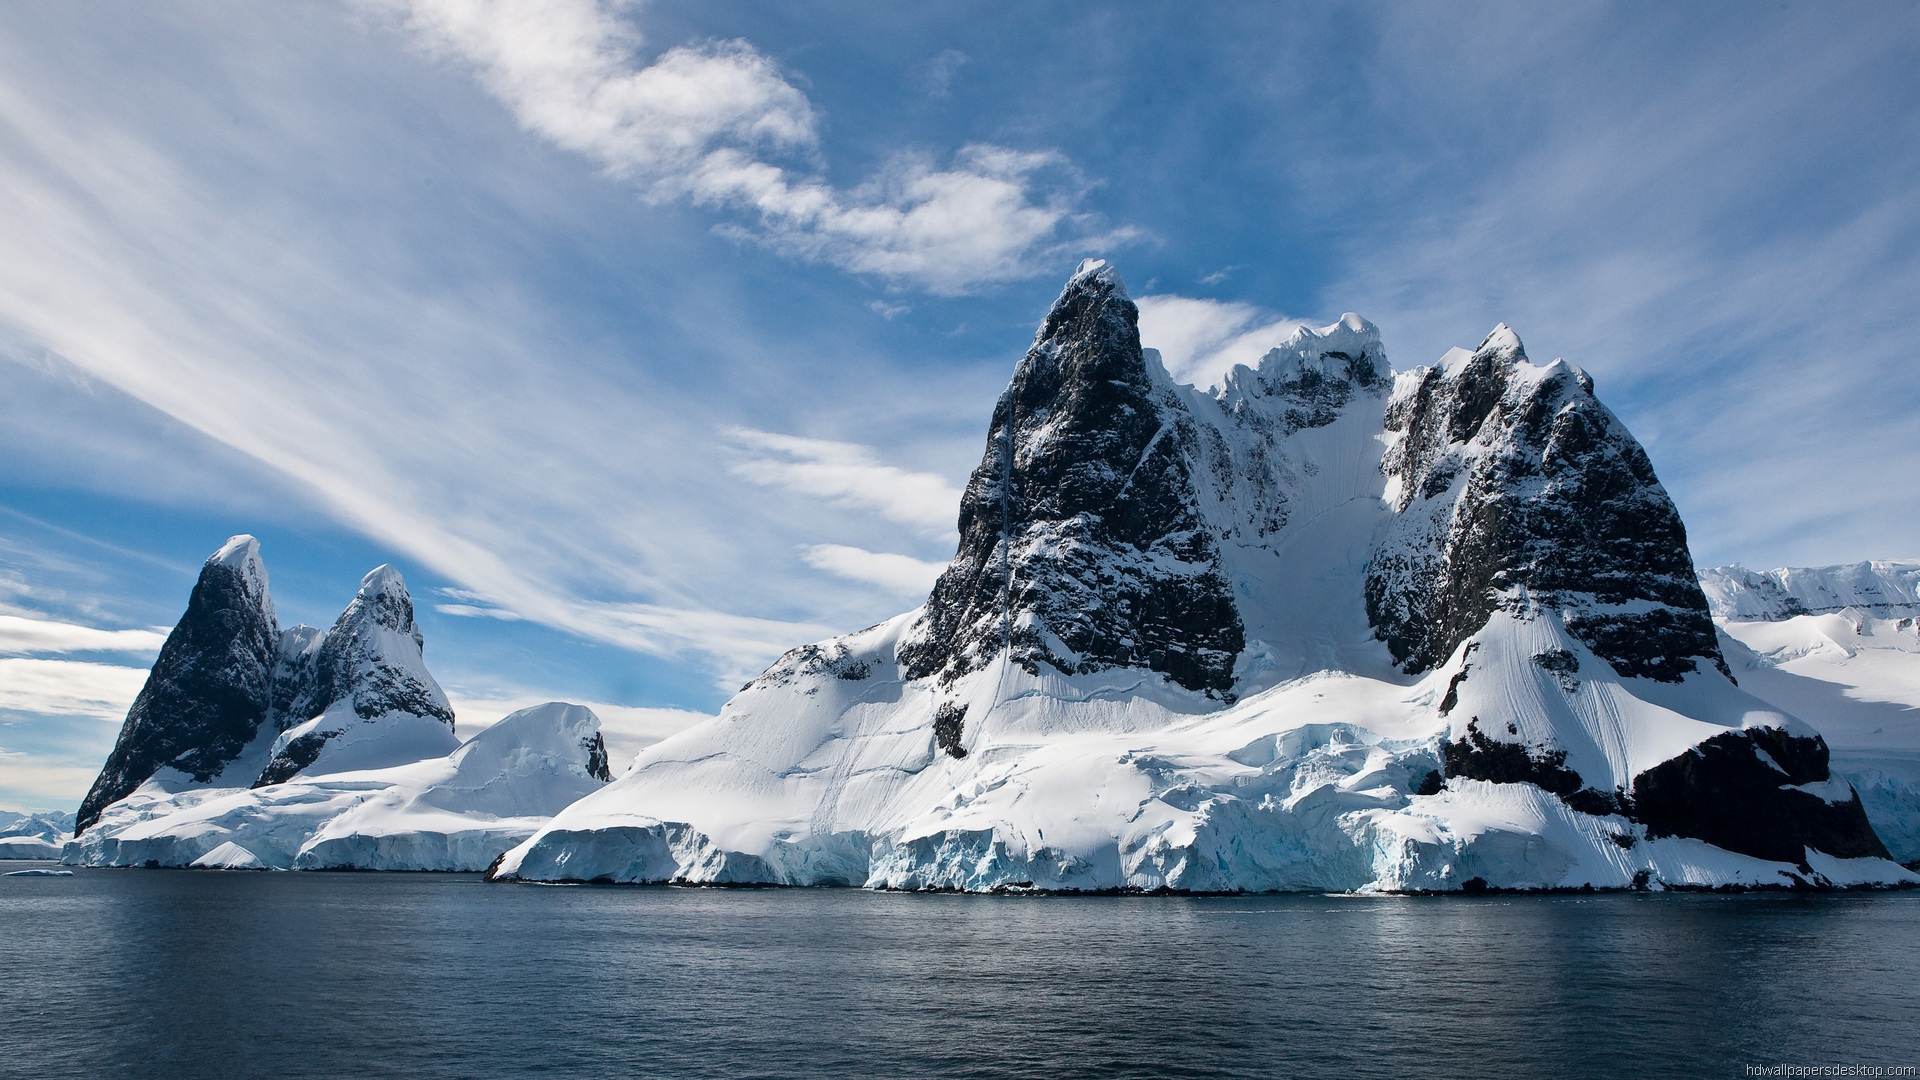 壁紙1920x1080フルhd 1080p,自然の風景,自然,氷,山,北極海